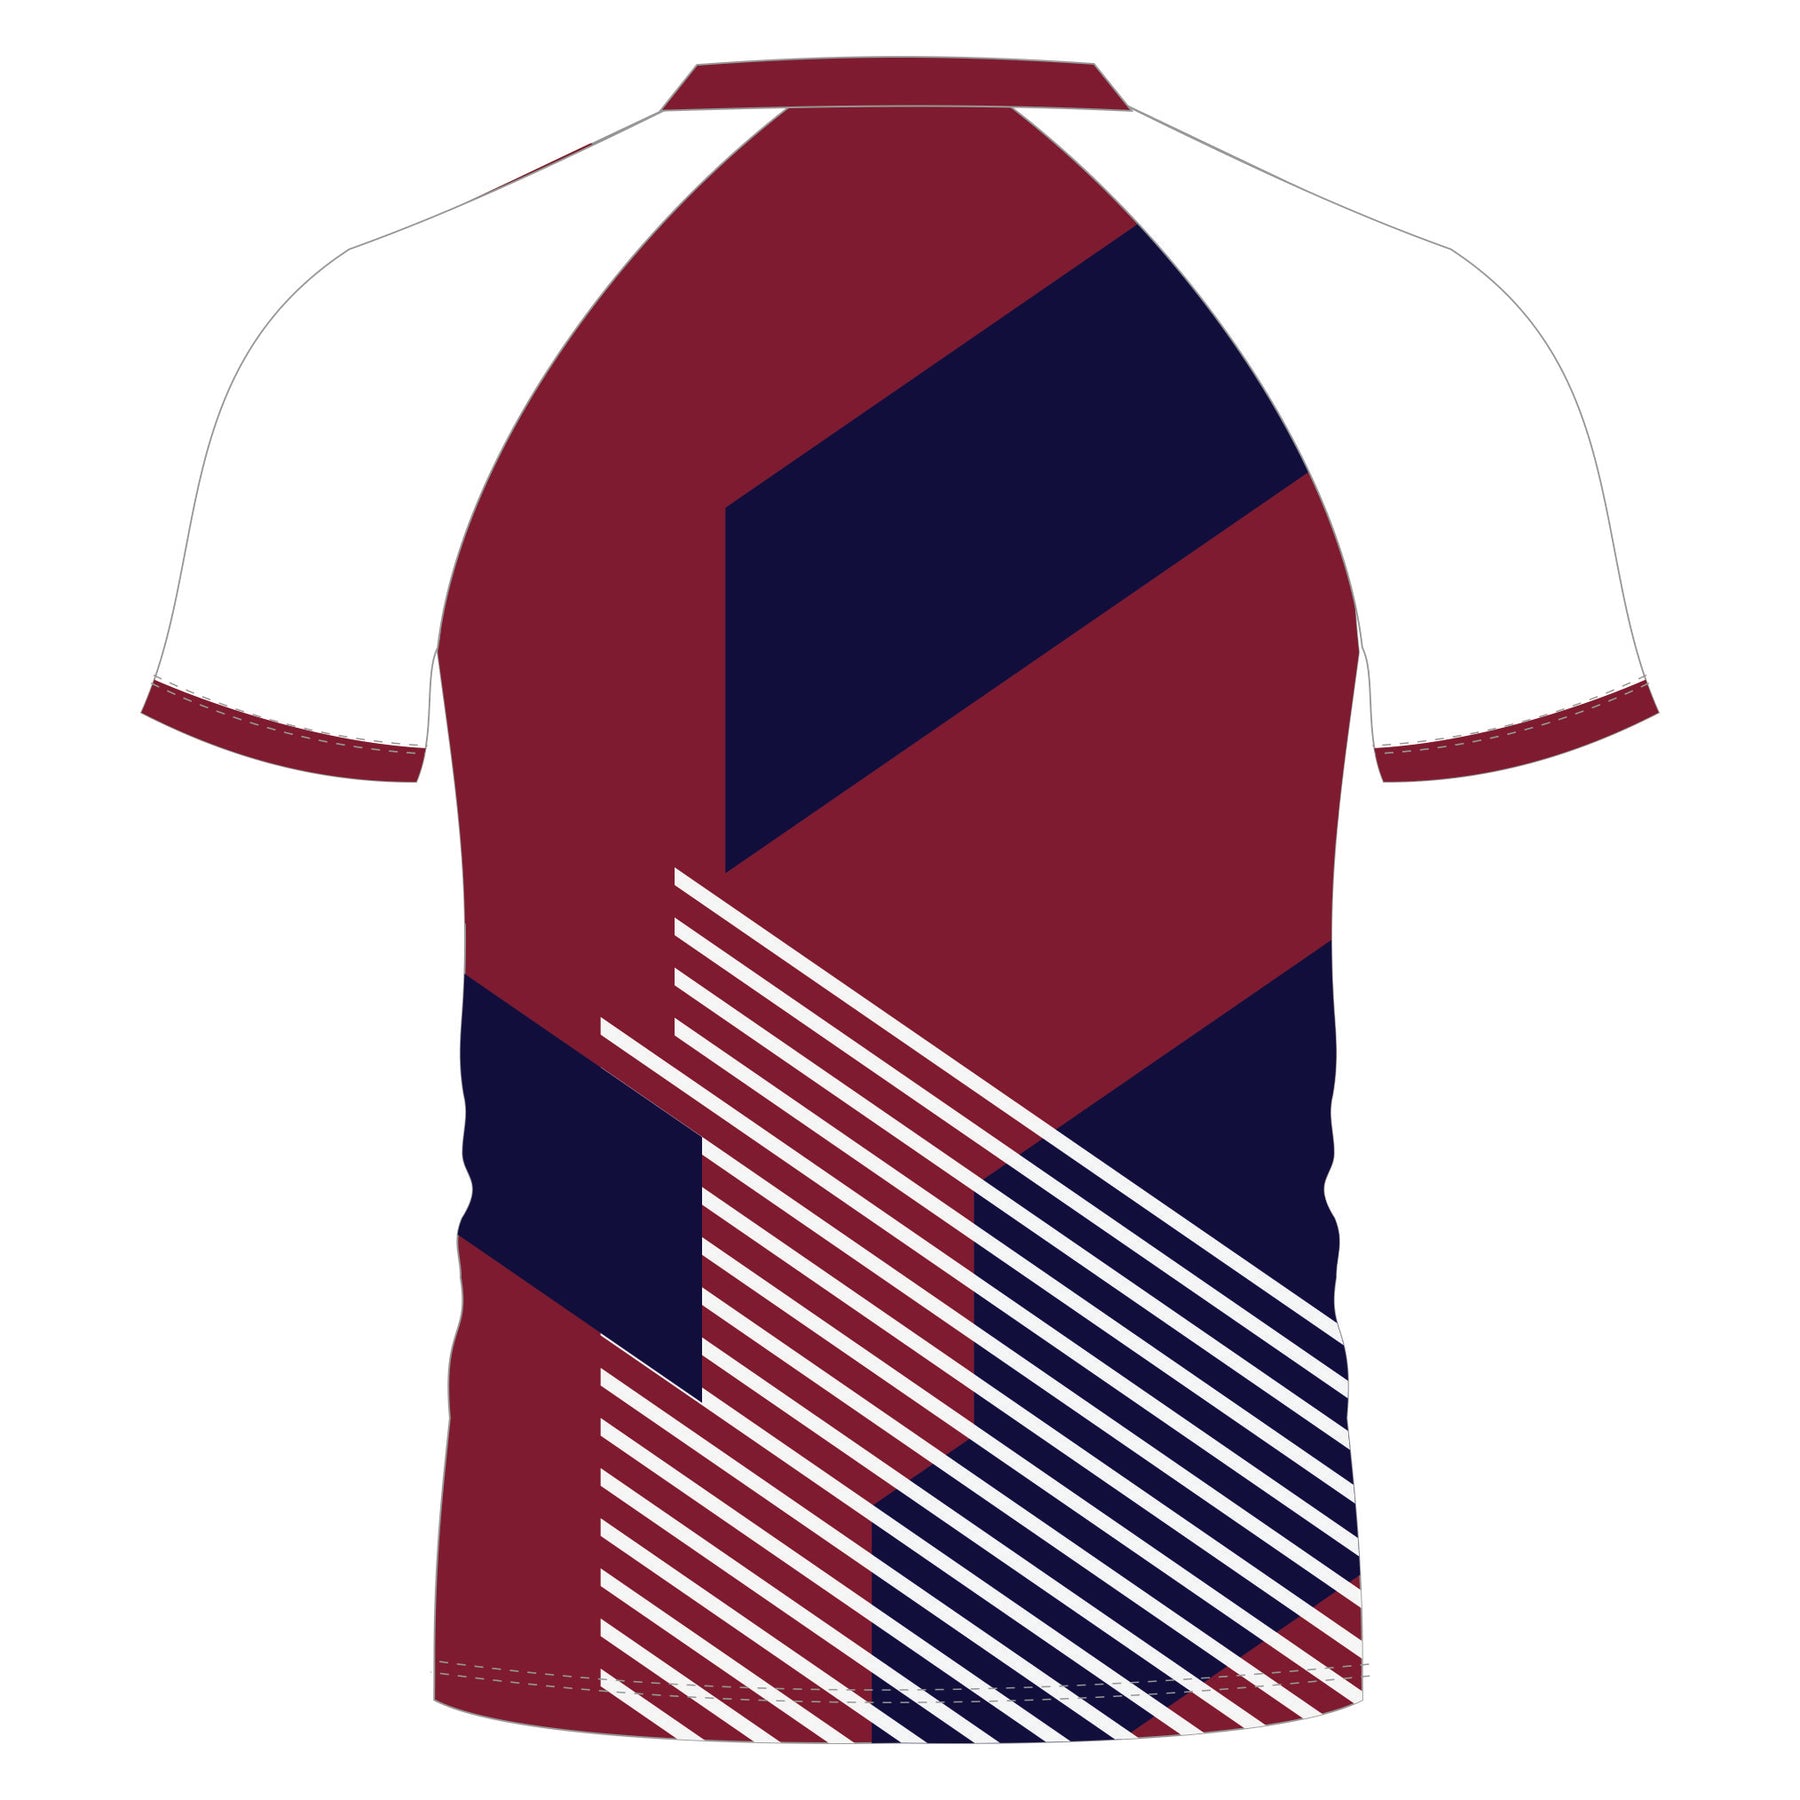 Royal Grammar School Senior T shirt: Maroon 2020 Athletic Fit